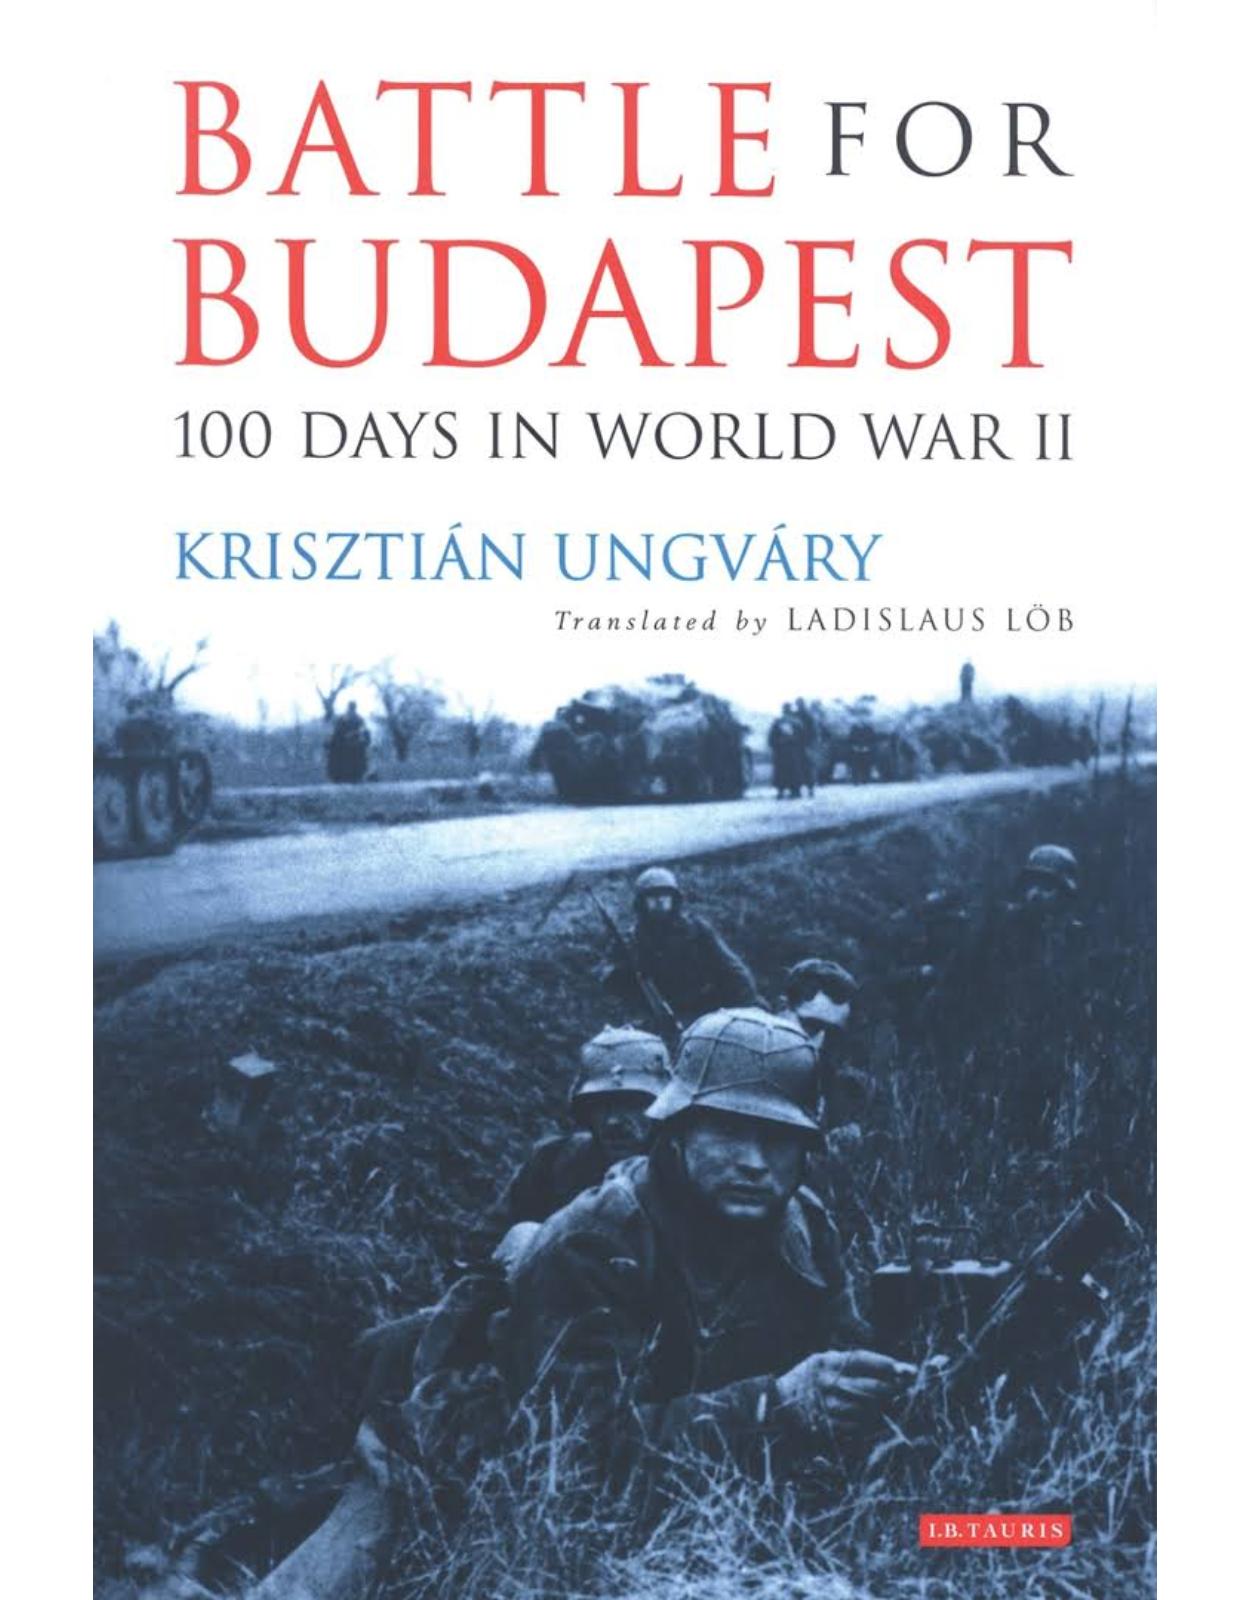 Battle for Budapest: 100 Days in World War II